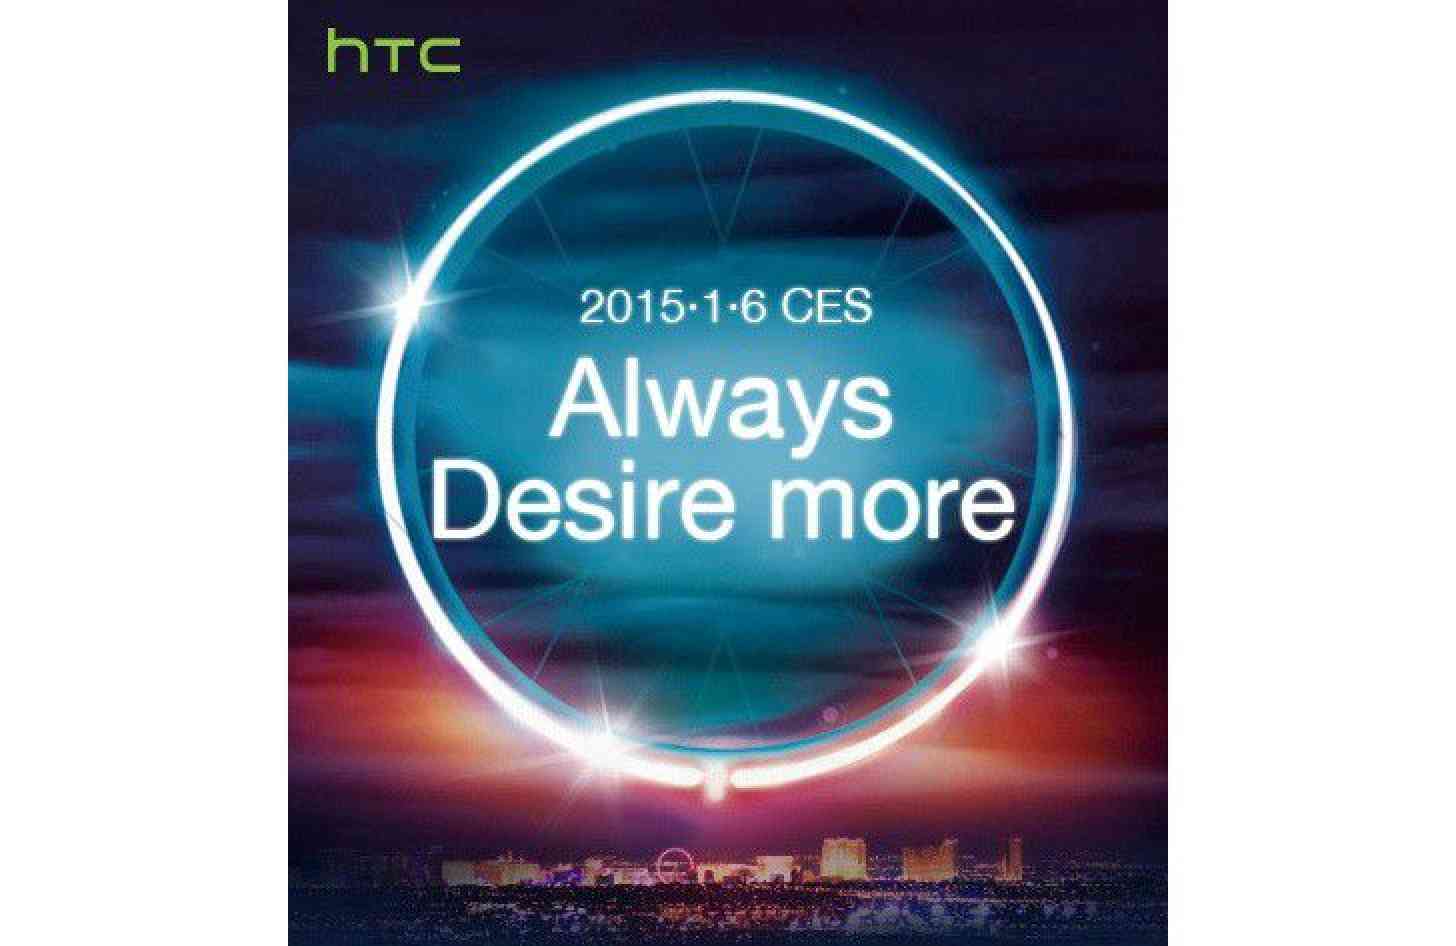 HTC Always Desire more CES 2015 teaser crop